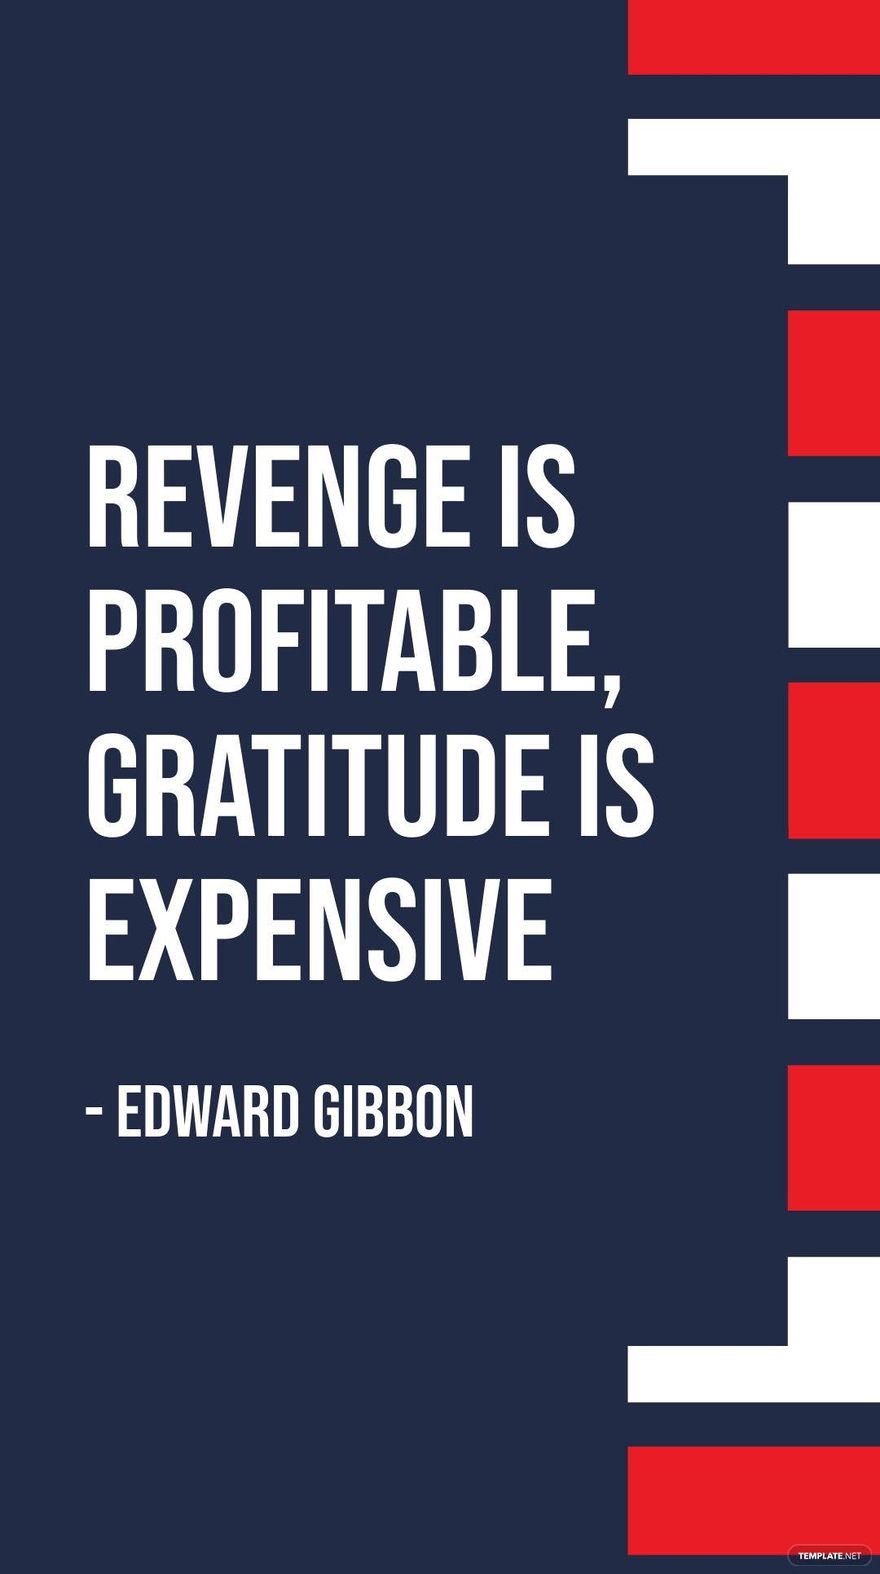 Edward Gibbon - Revenge is profitable, gratitude is expensive